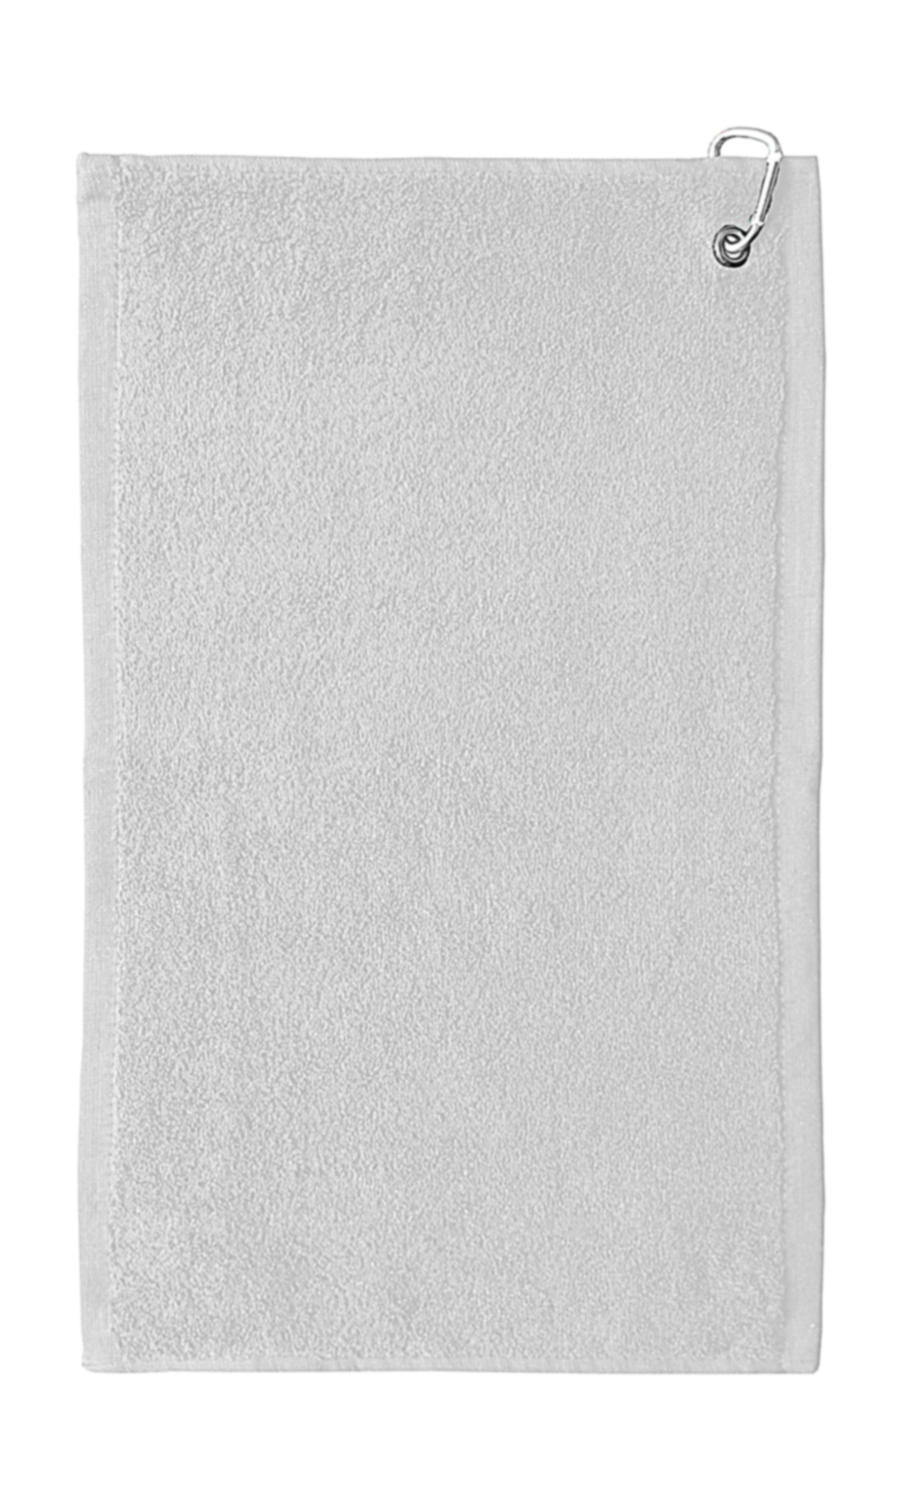  Thames Golf Towel 30x50 cm in Farbe White